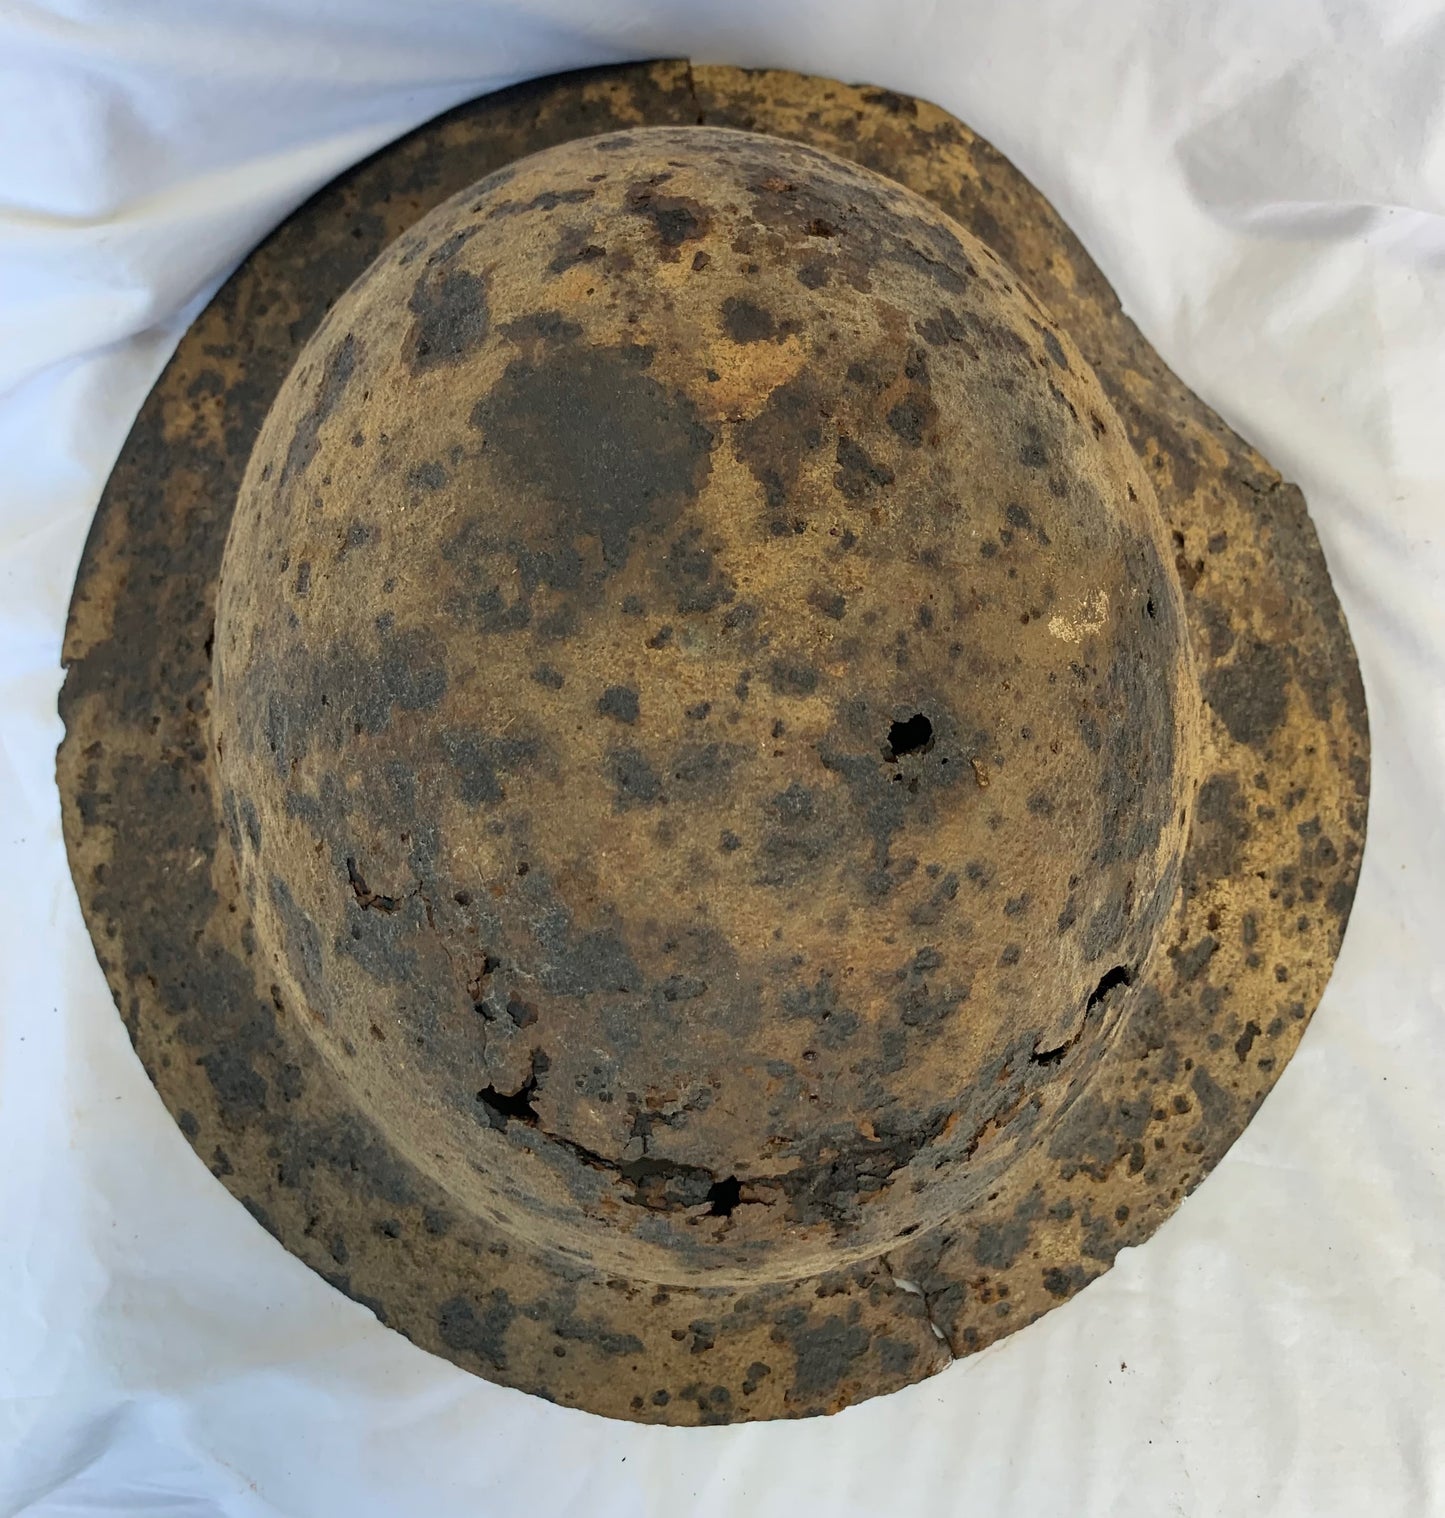 WW1 British Brodie Helmet recovered from the battle of Passchendaele 1917